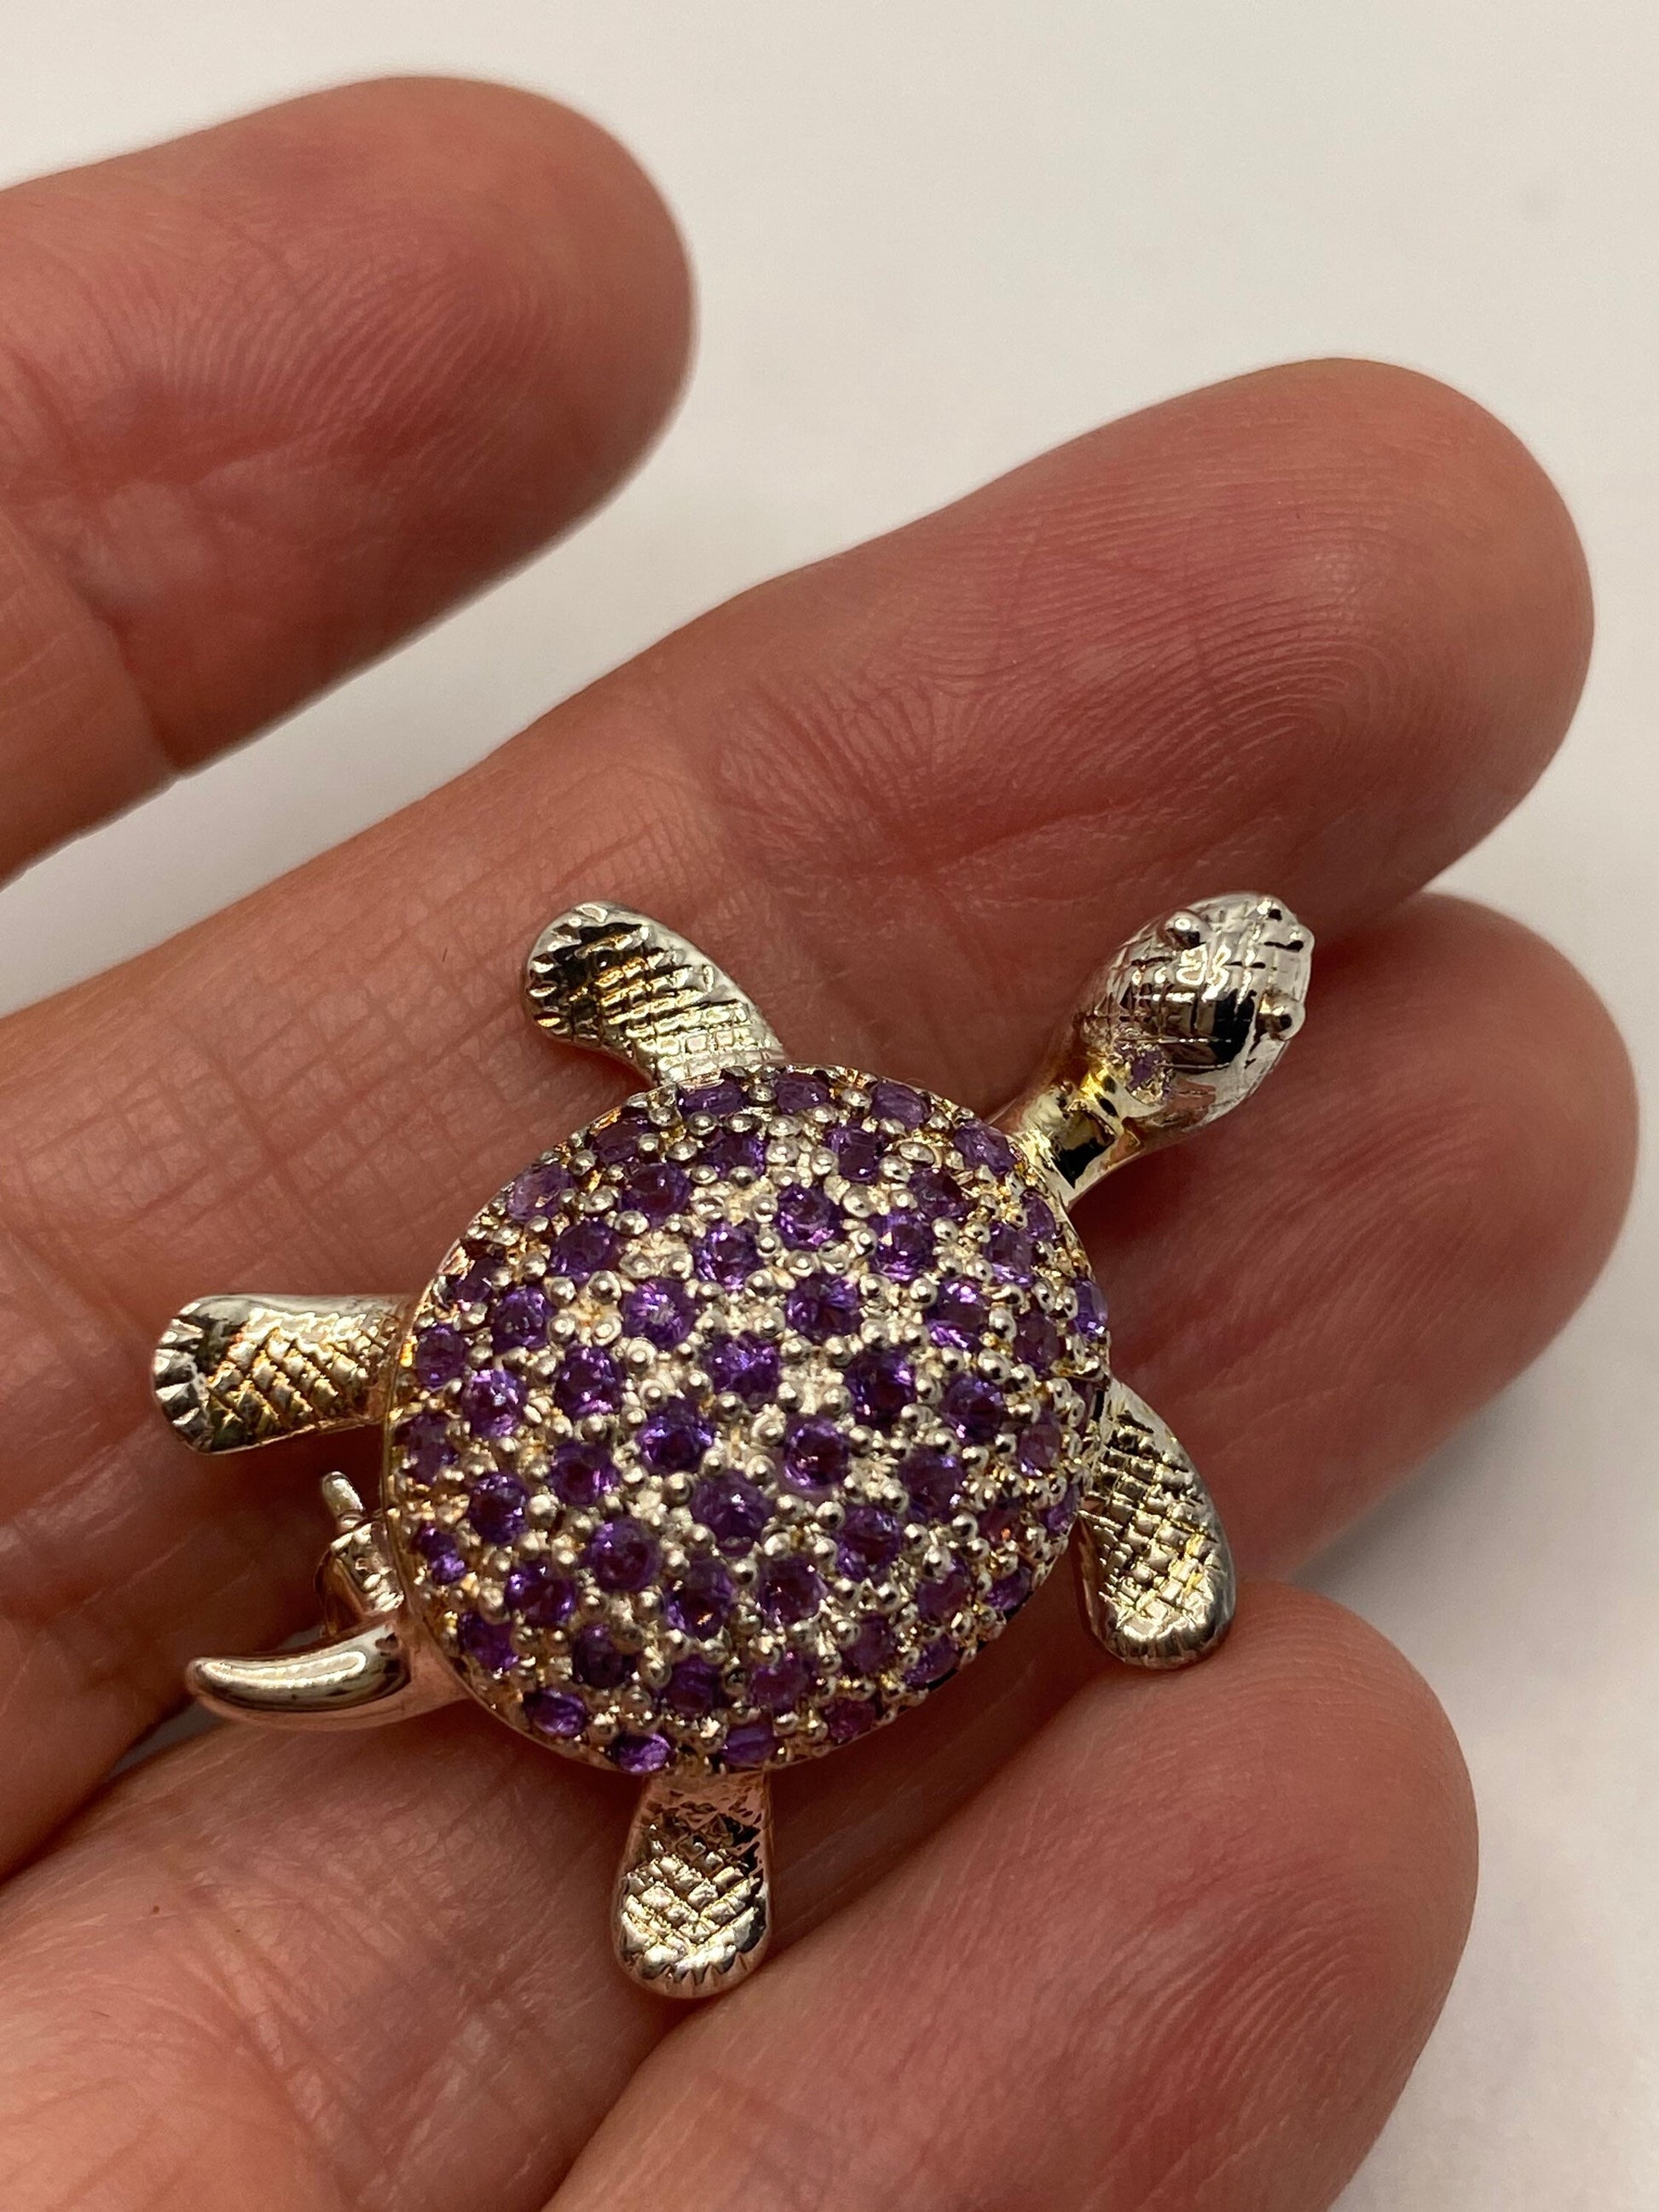 Vintage Purple Amethyst Turtle Pin 925 Sterling Silver Brooch